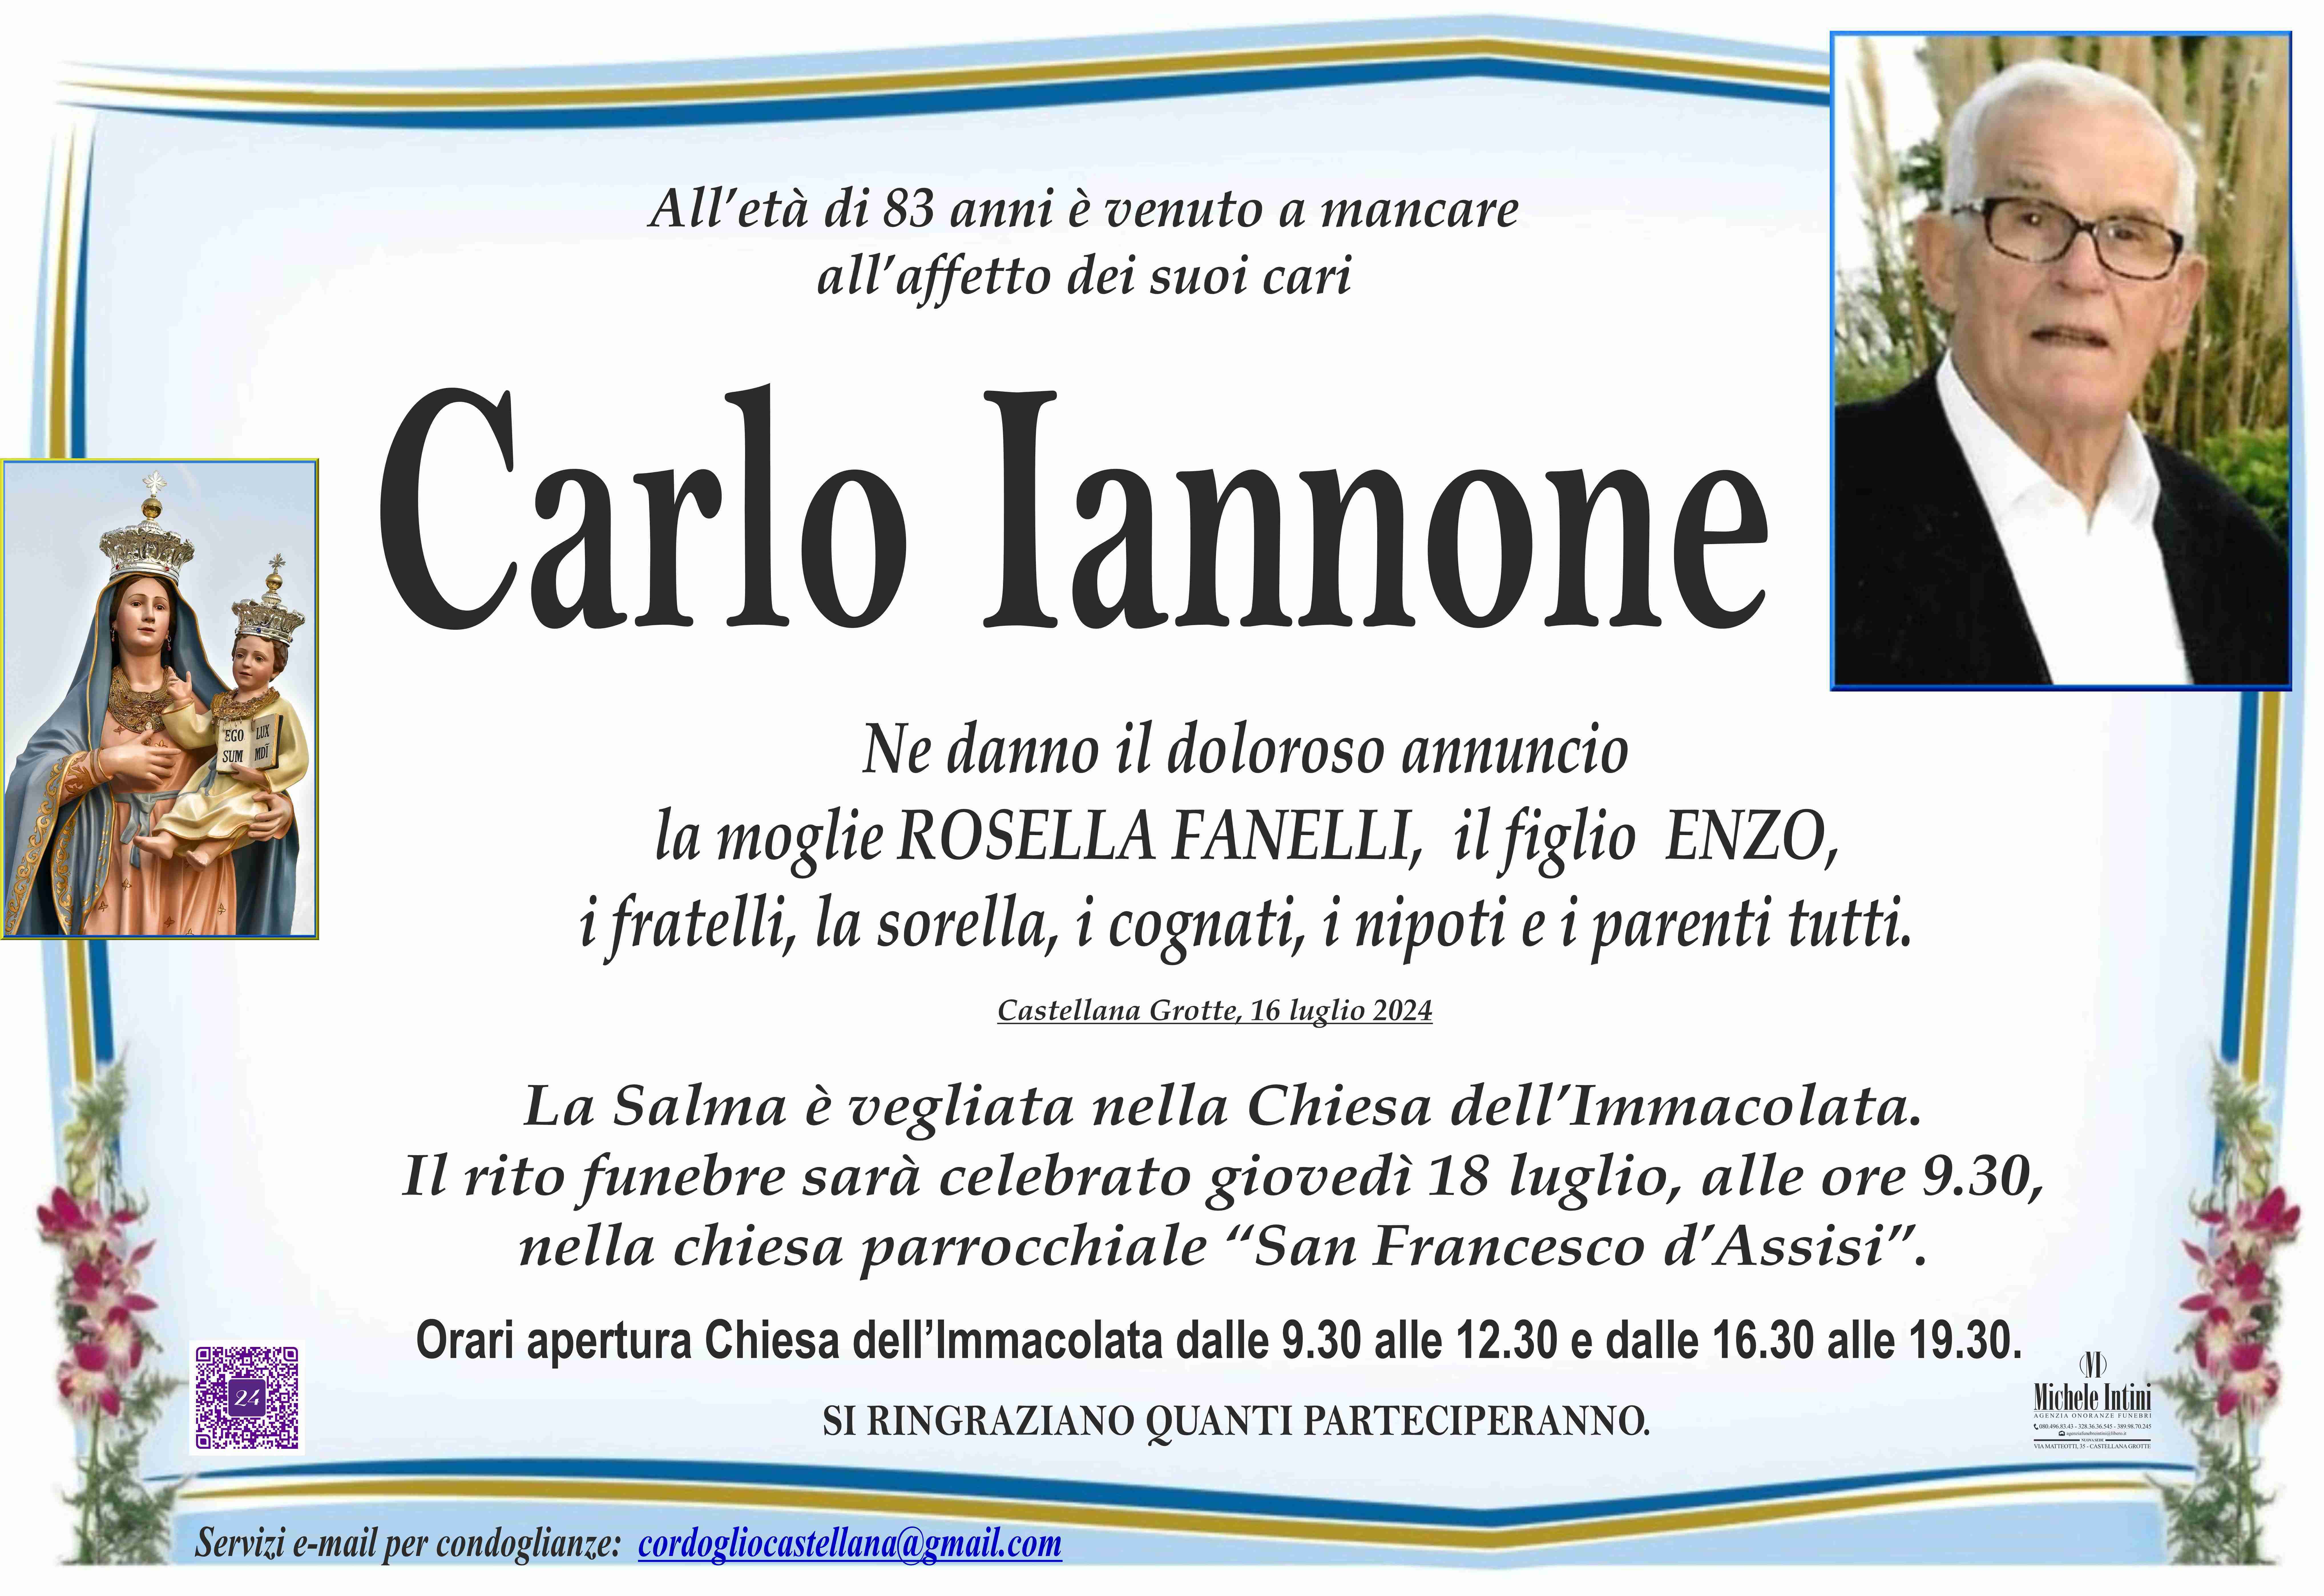 Carlo Iannone